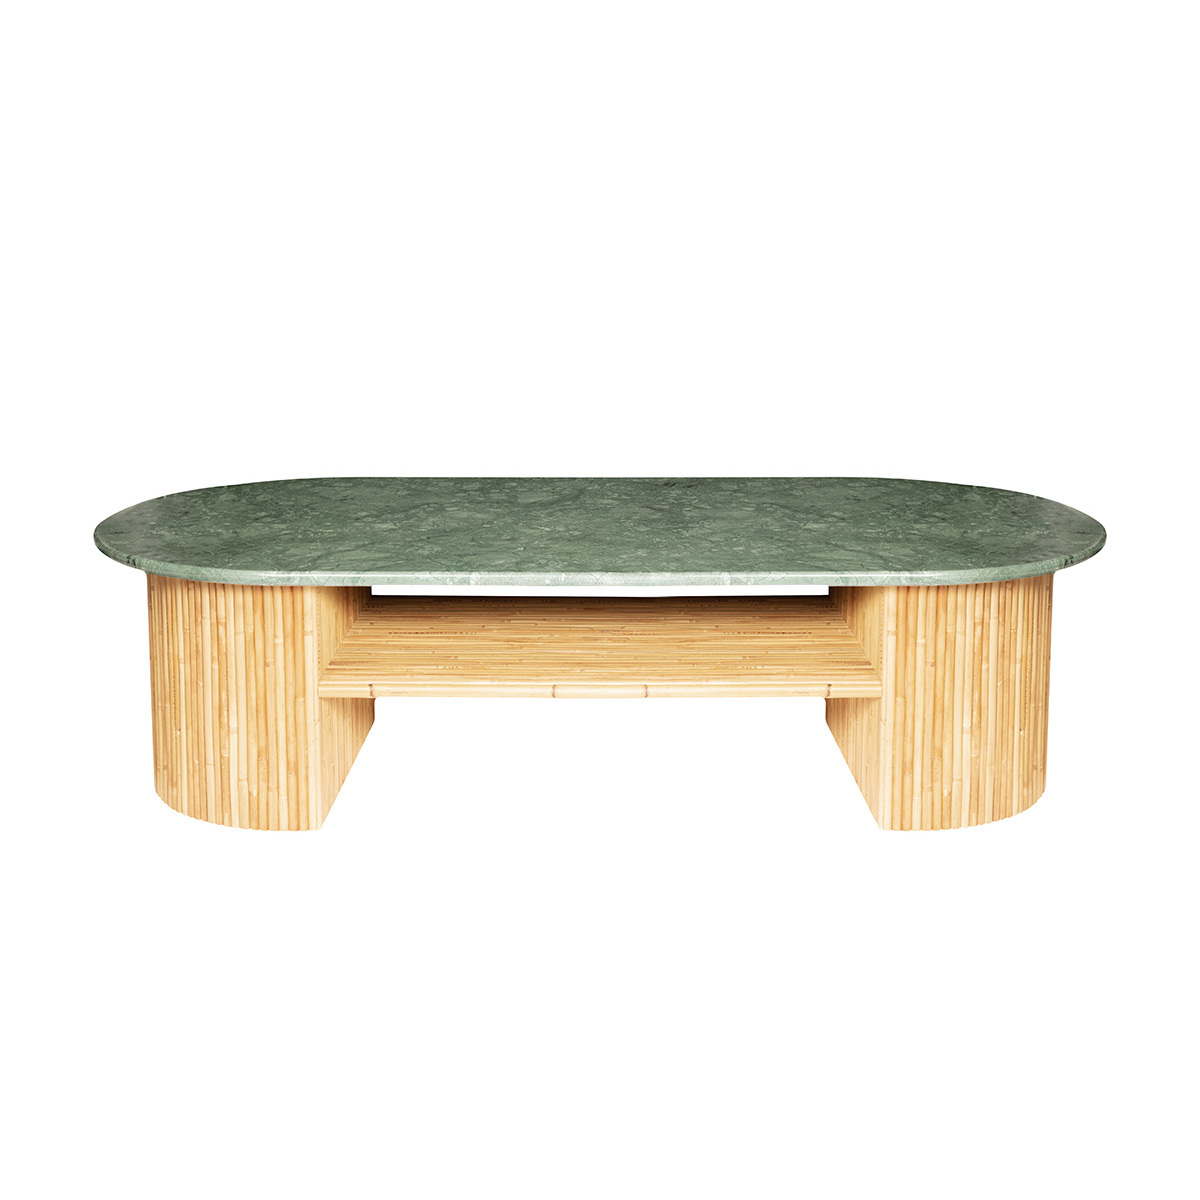 Coffee Table Riviera, Green - L57 x W26 x H16 in - Carrara marble / Rattan - image 1